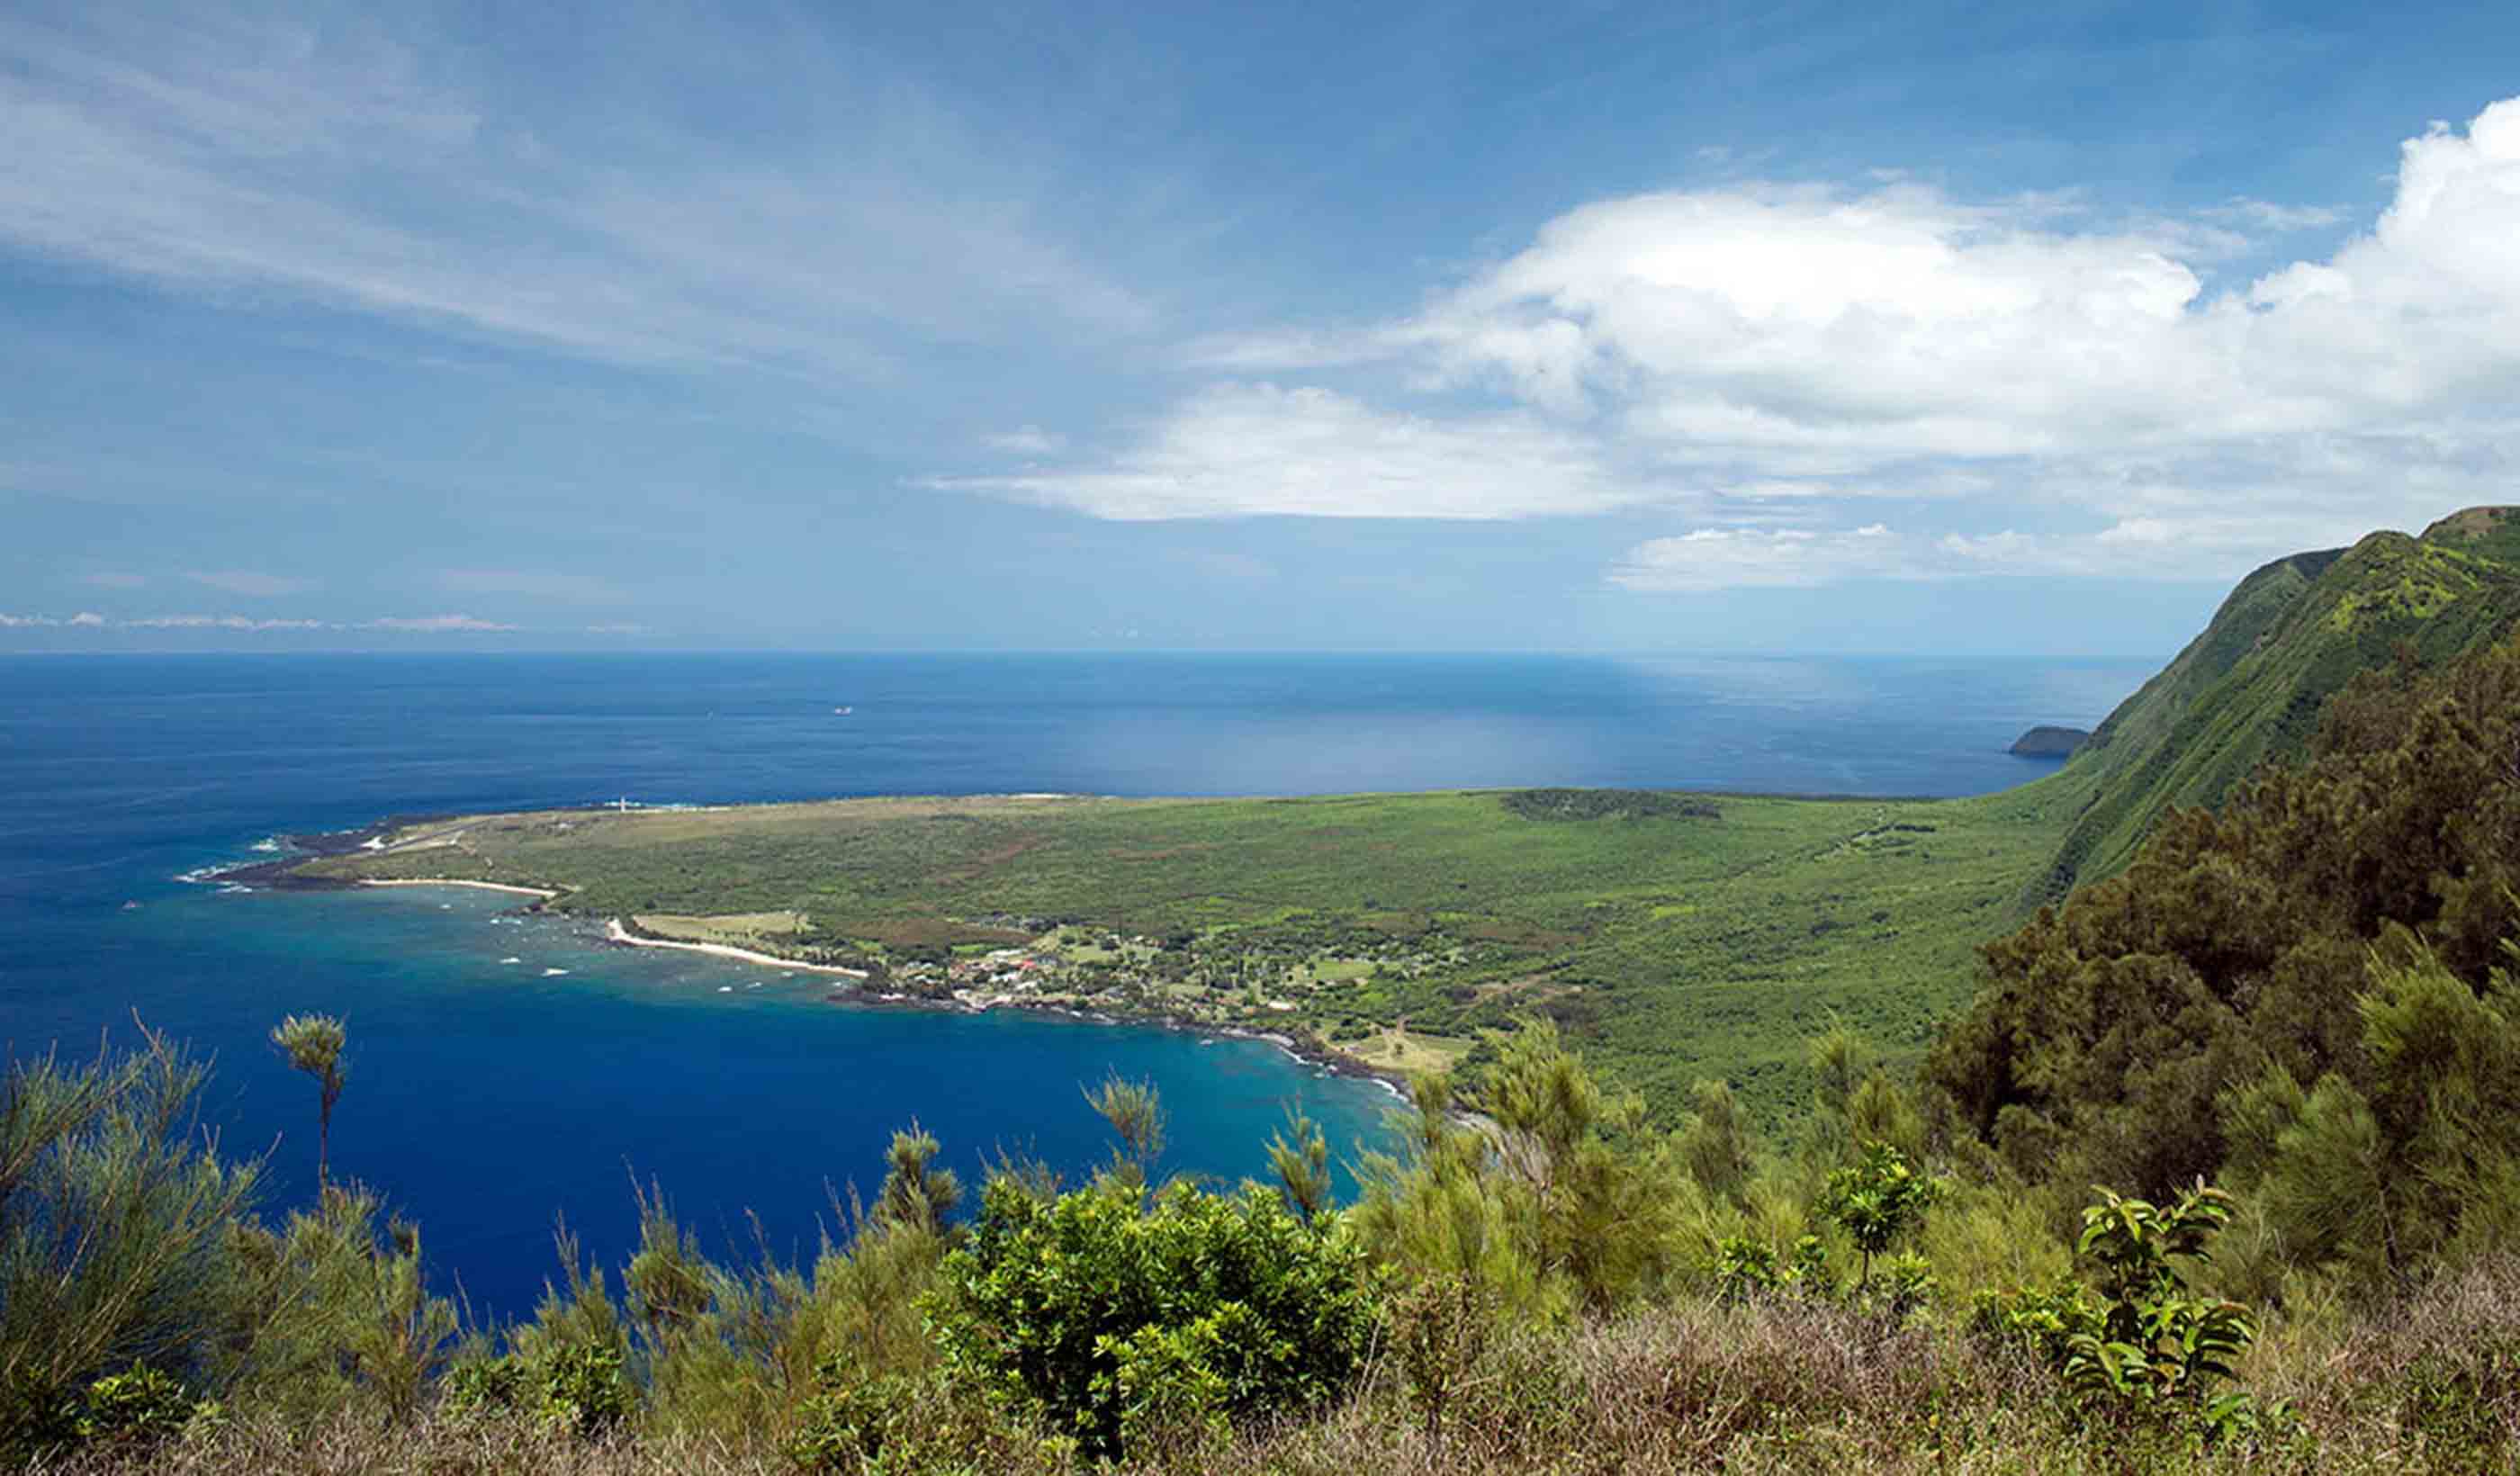 Surveying Hawaii’s Kalaupapa Peninsula: Connecting a rich past to an exciting future